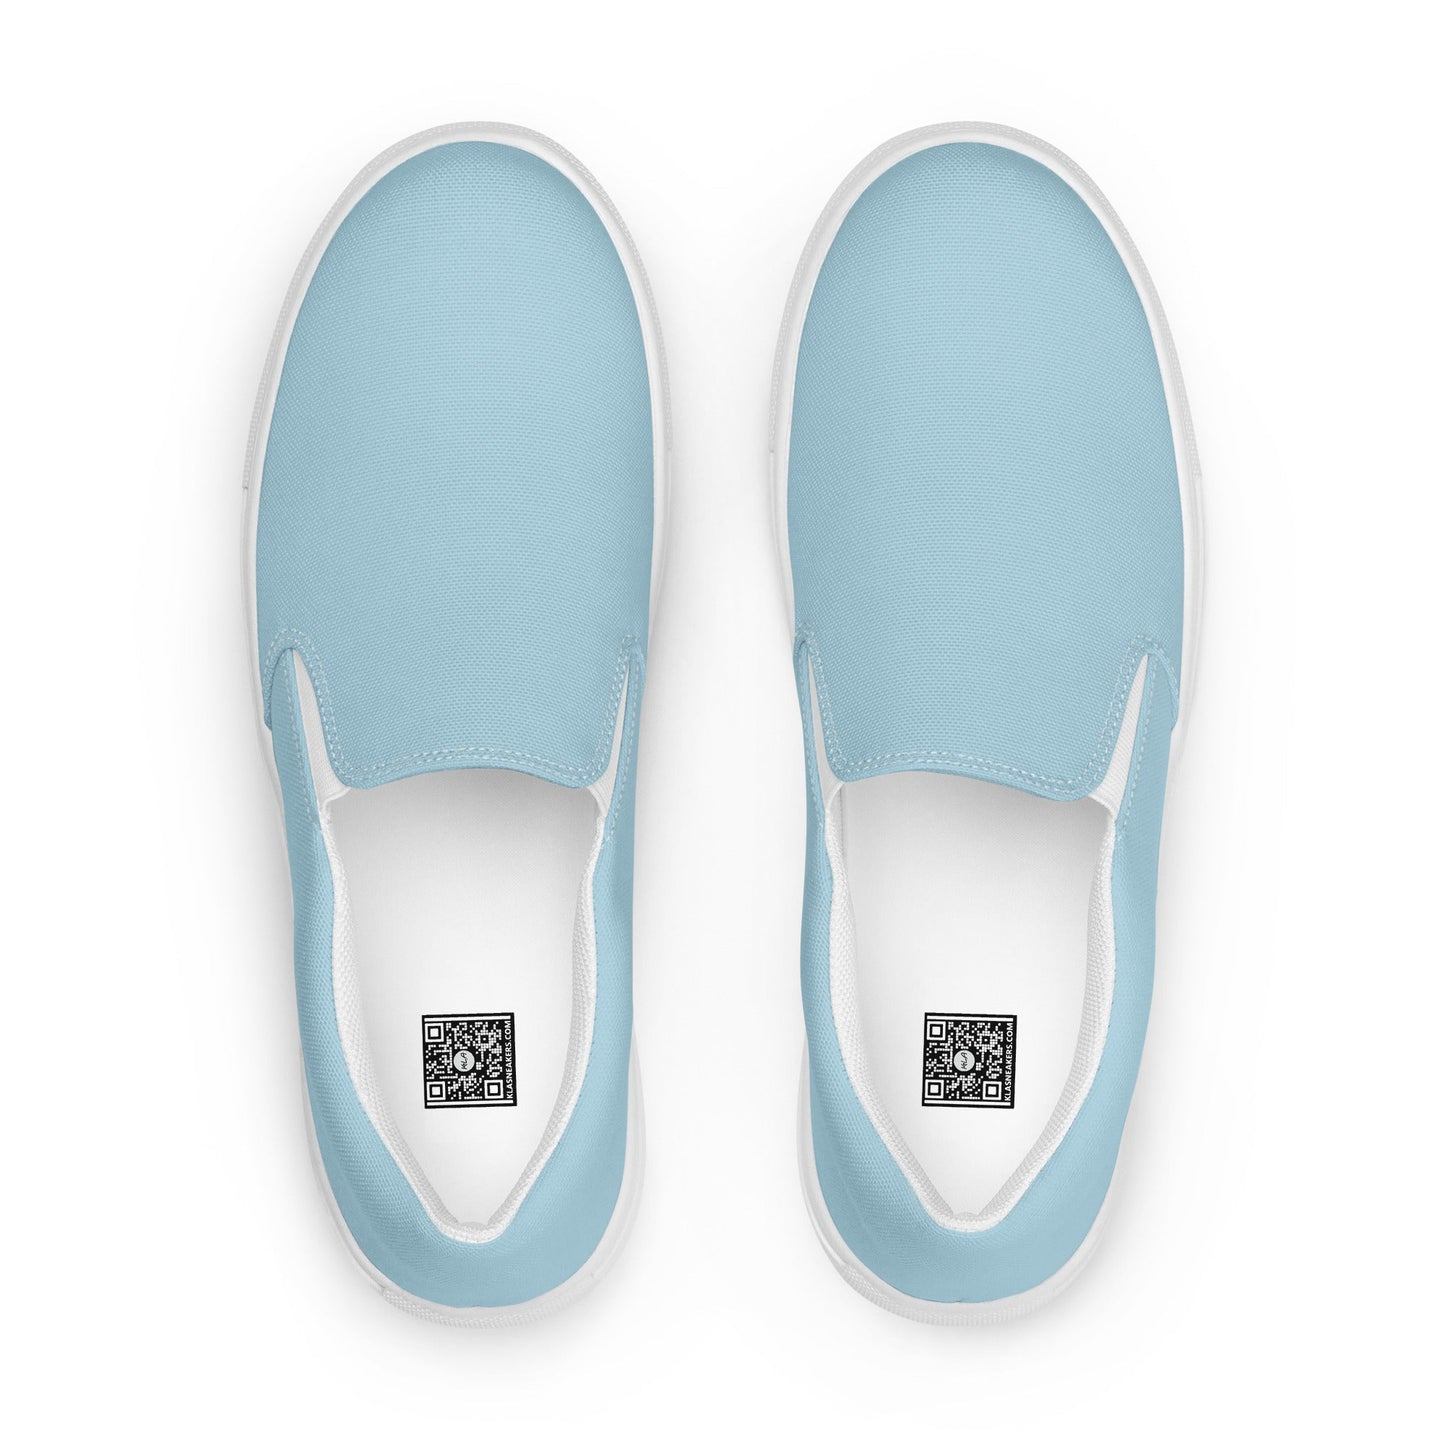 klasneakers Women’s slip-on canvas shoes - Sky Blue